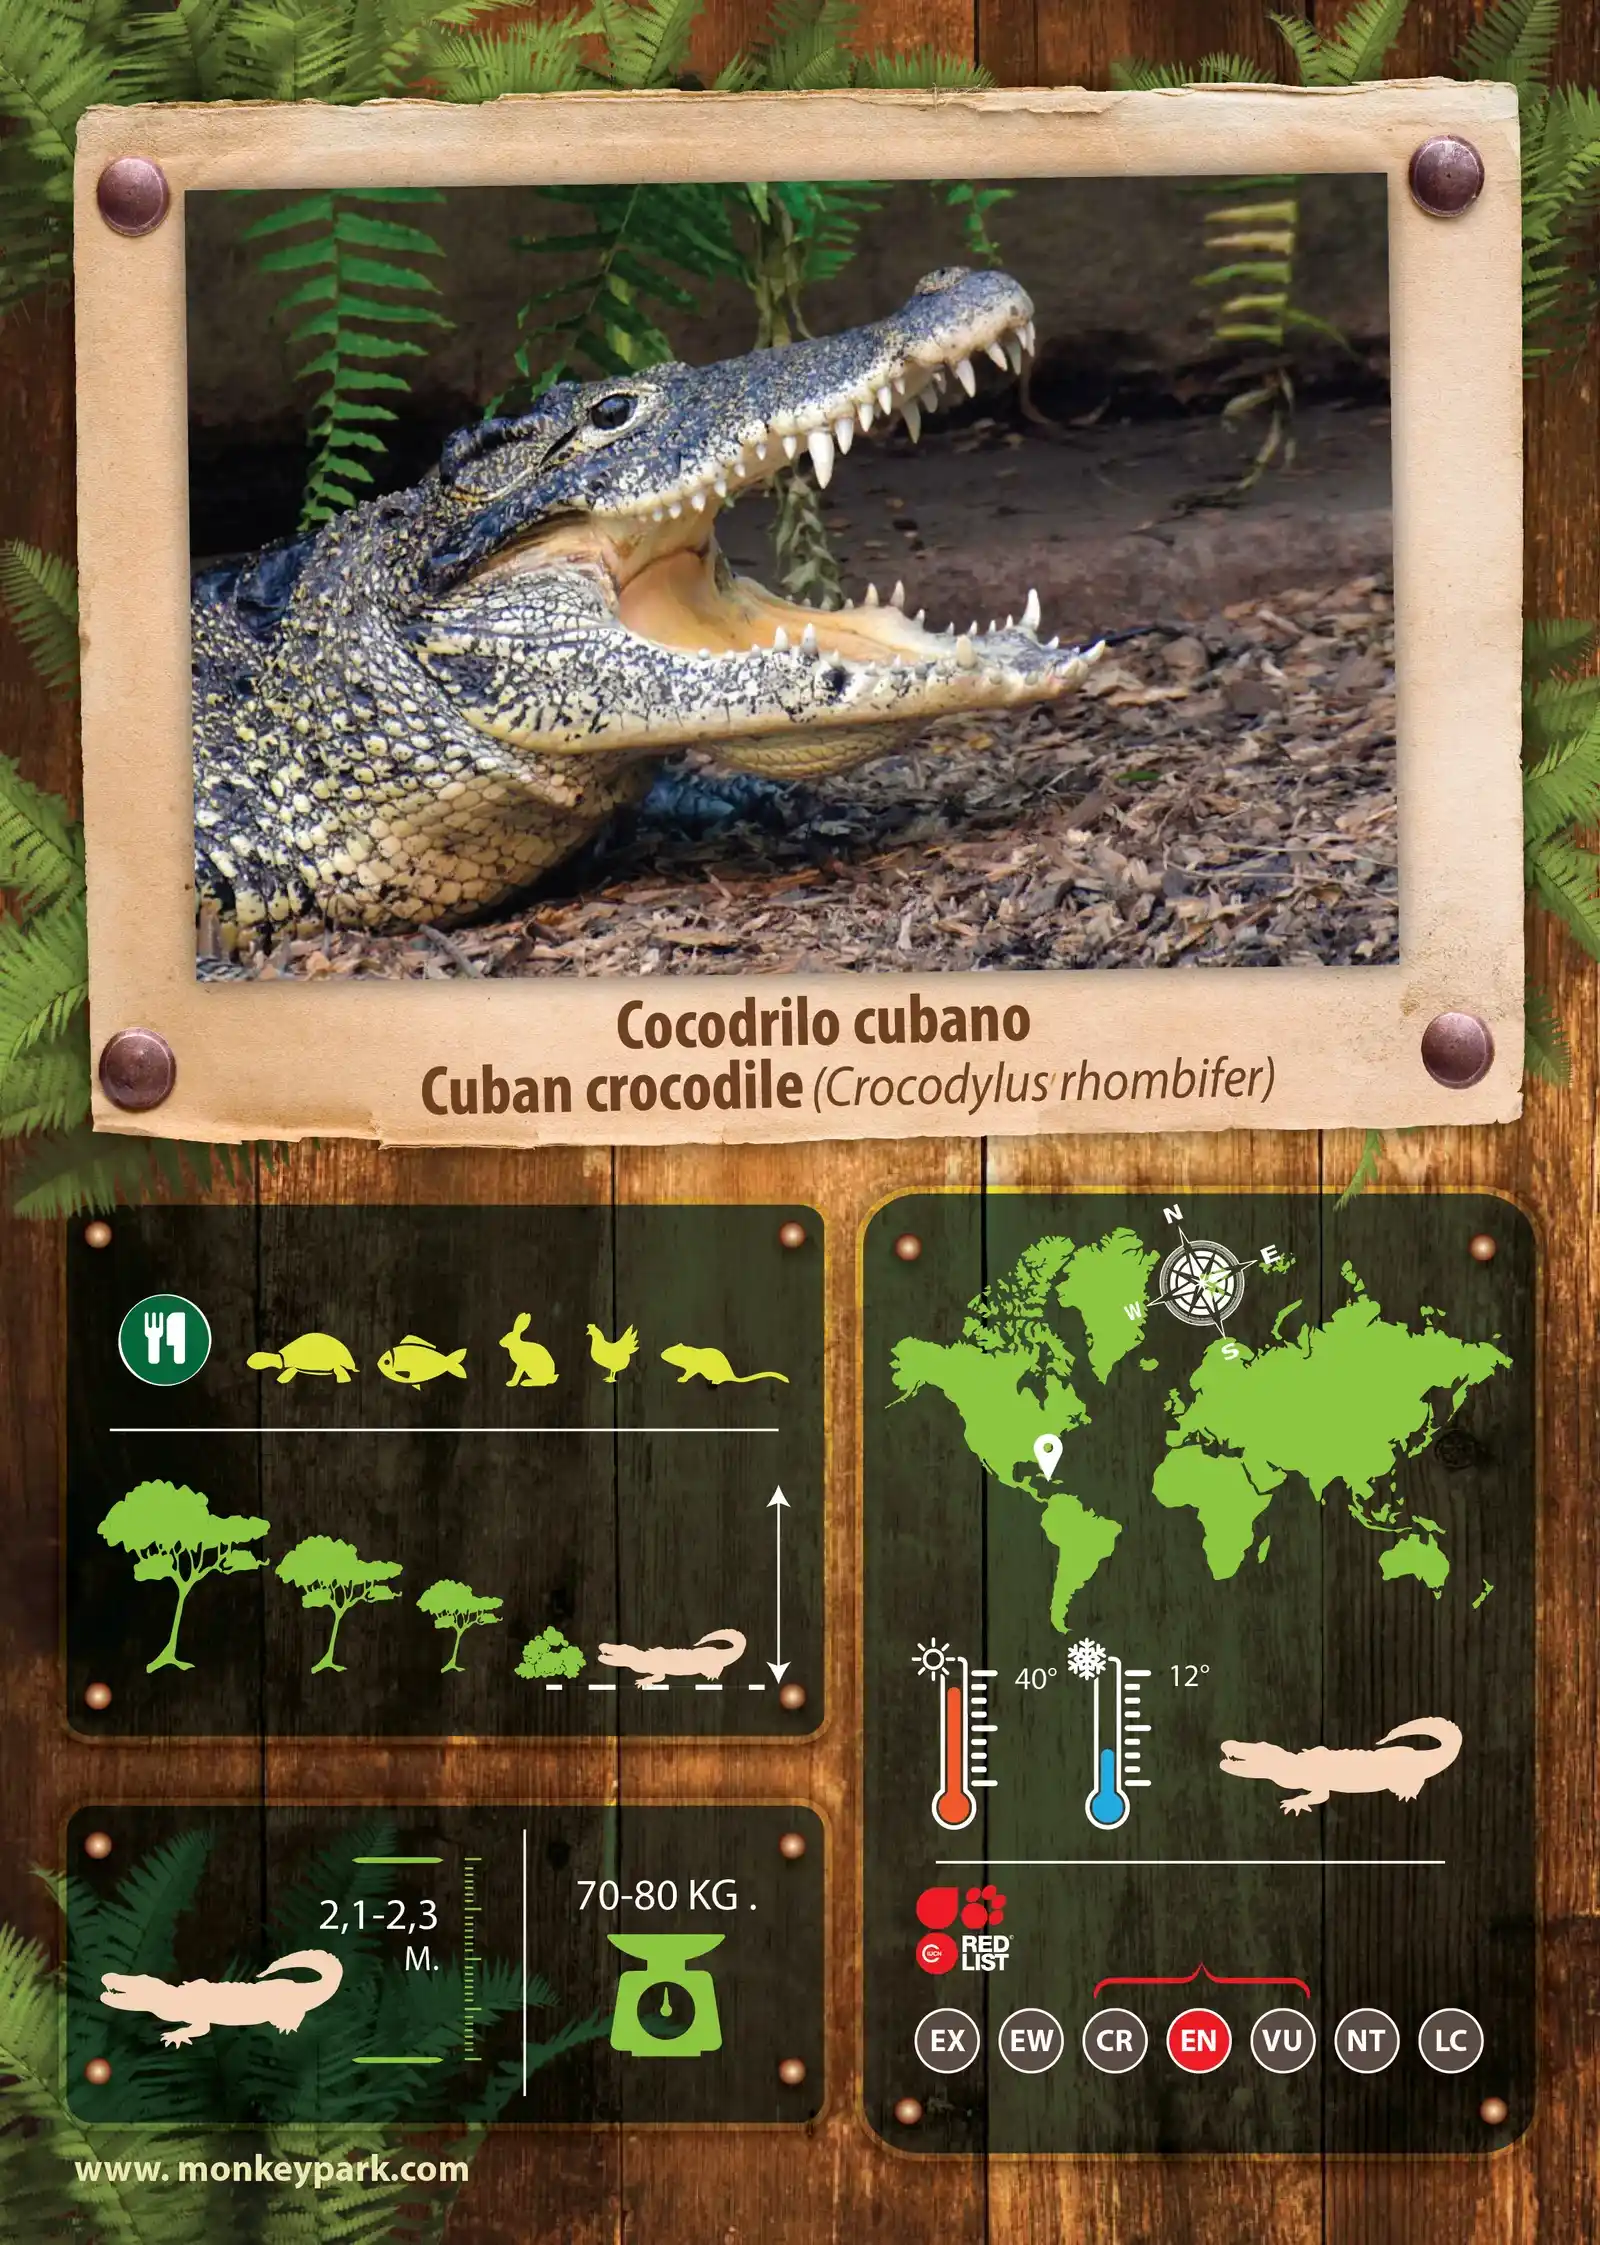 Monkey park infografia animal cocodrilo cubano